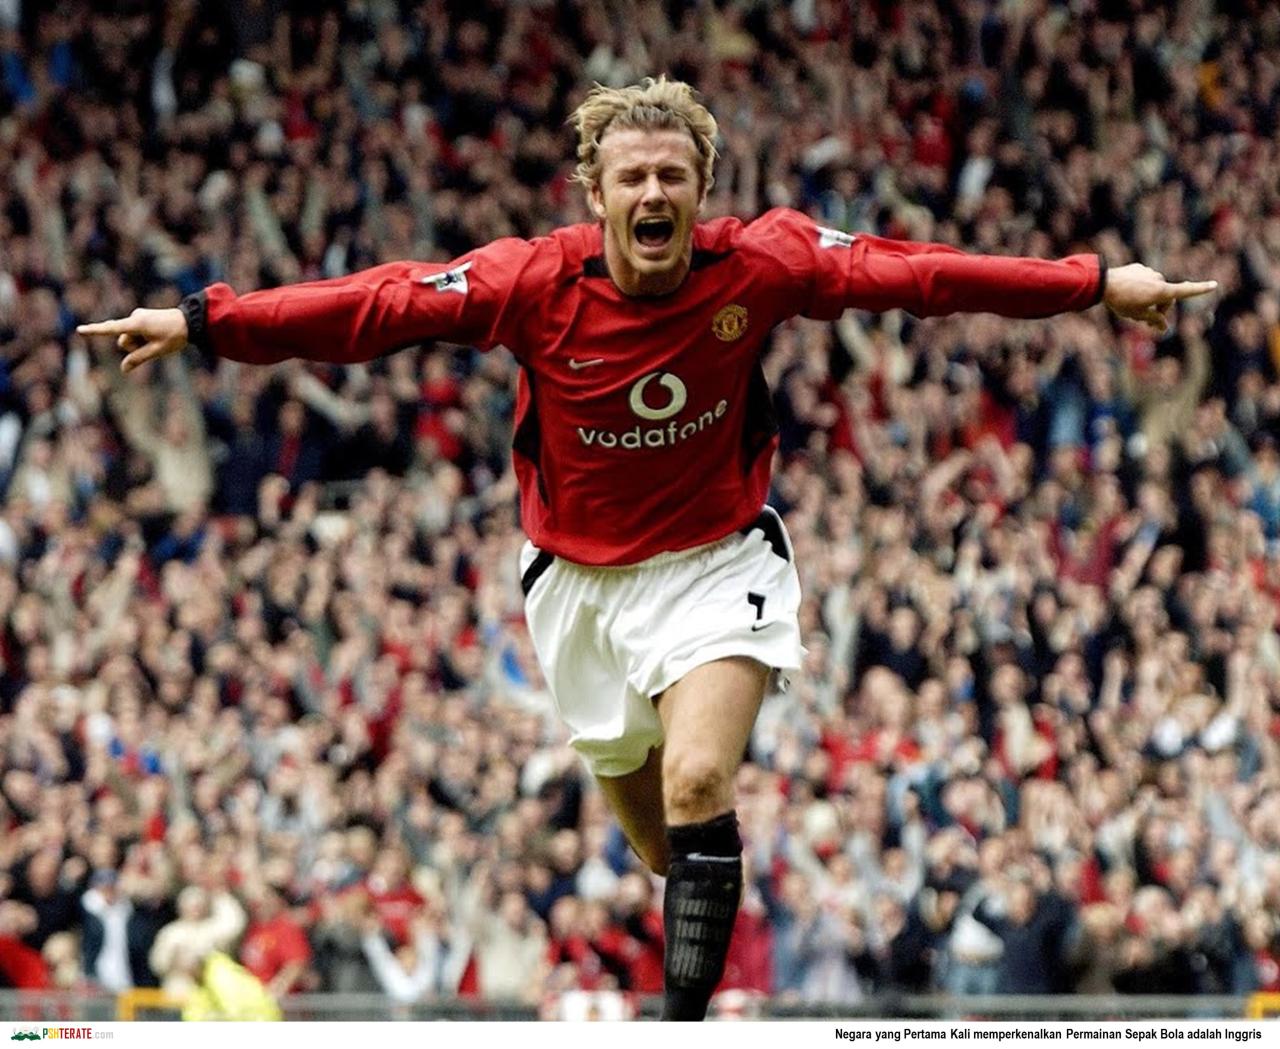 <a href="https://www.pshterate.com/"><img src="David Beckham.jpg" alt="Negara yang Pertama Kali memperkenalkan Permainan Sepak Bola adalah Inggris"></a>